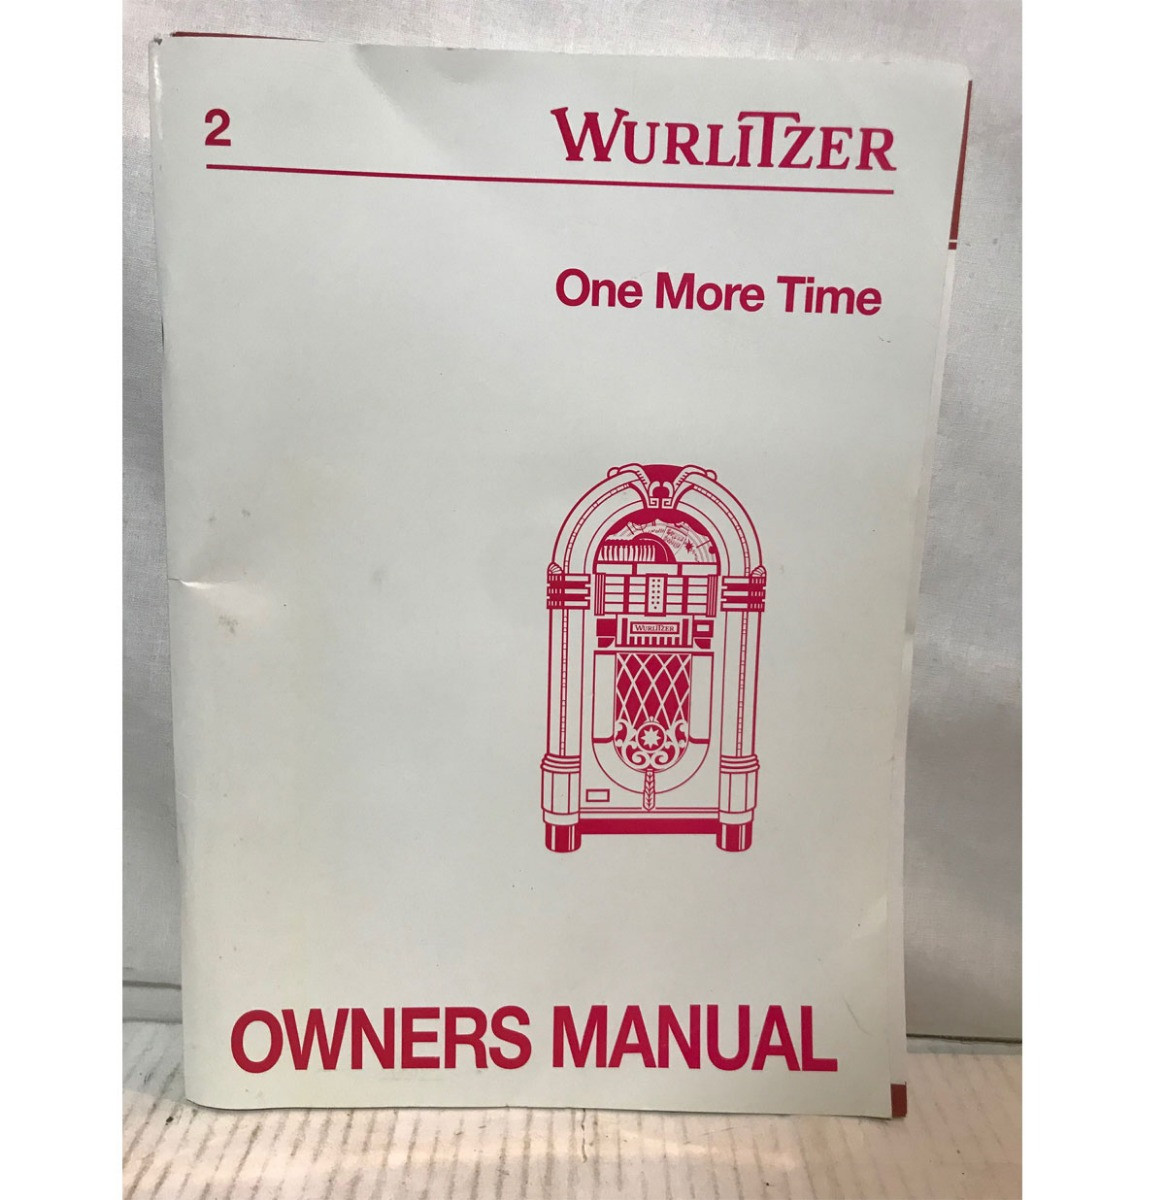 Wurlitzer One More Time Service Manual - CD Jukebox Older Version - Pre-owned